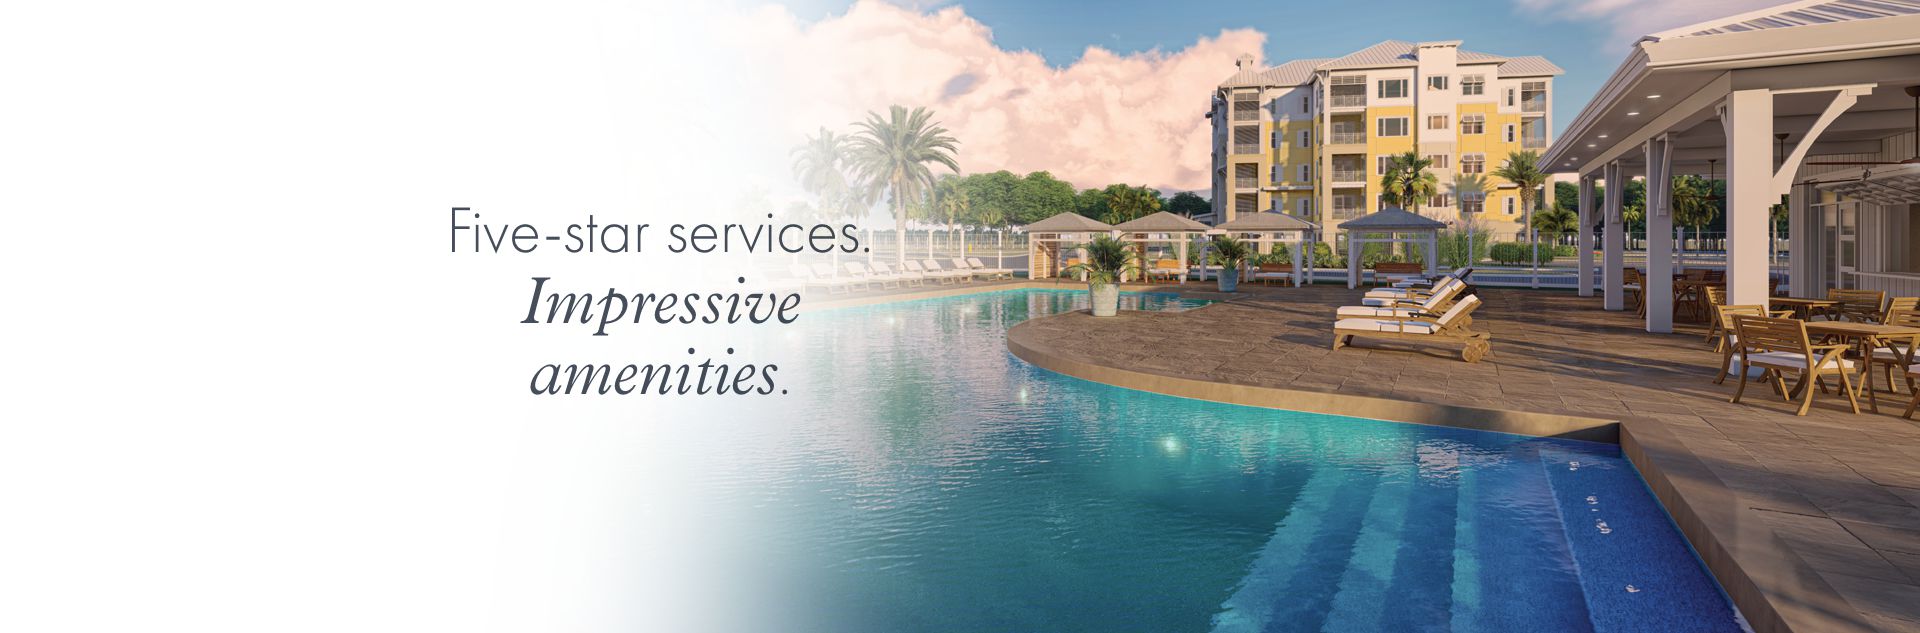 Five-star services. Impressive amenities.